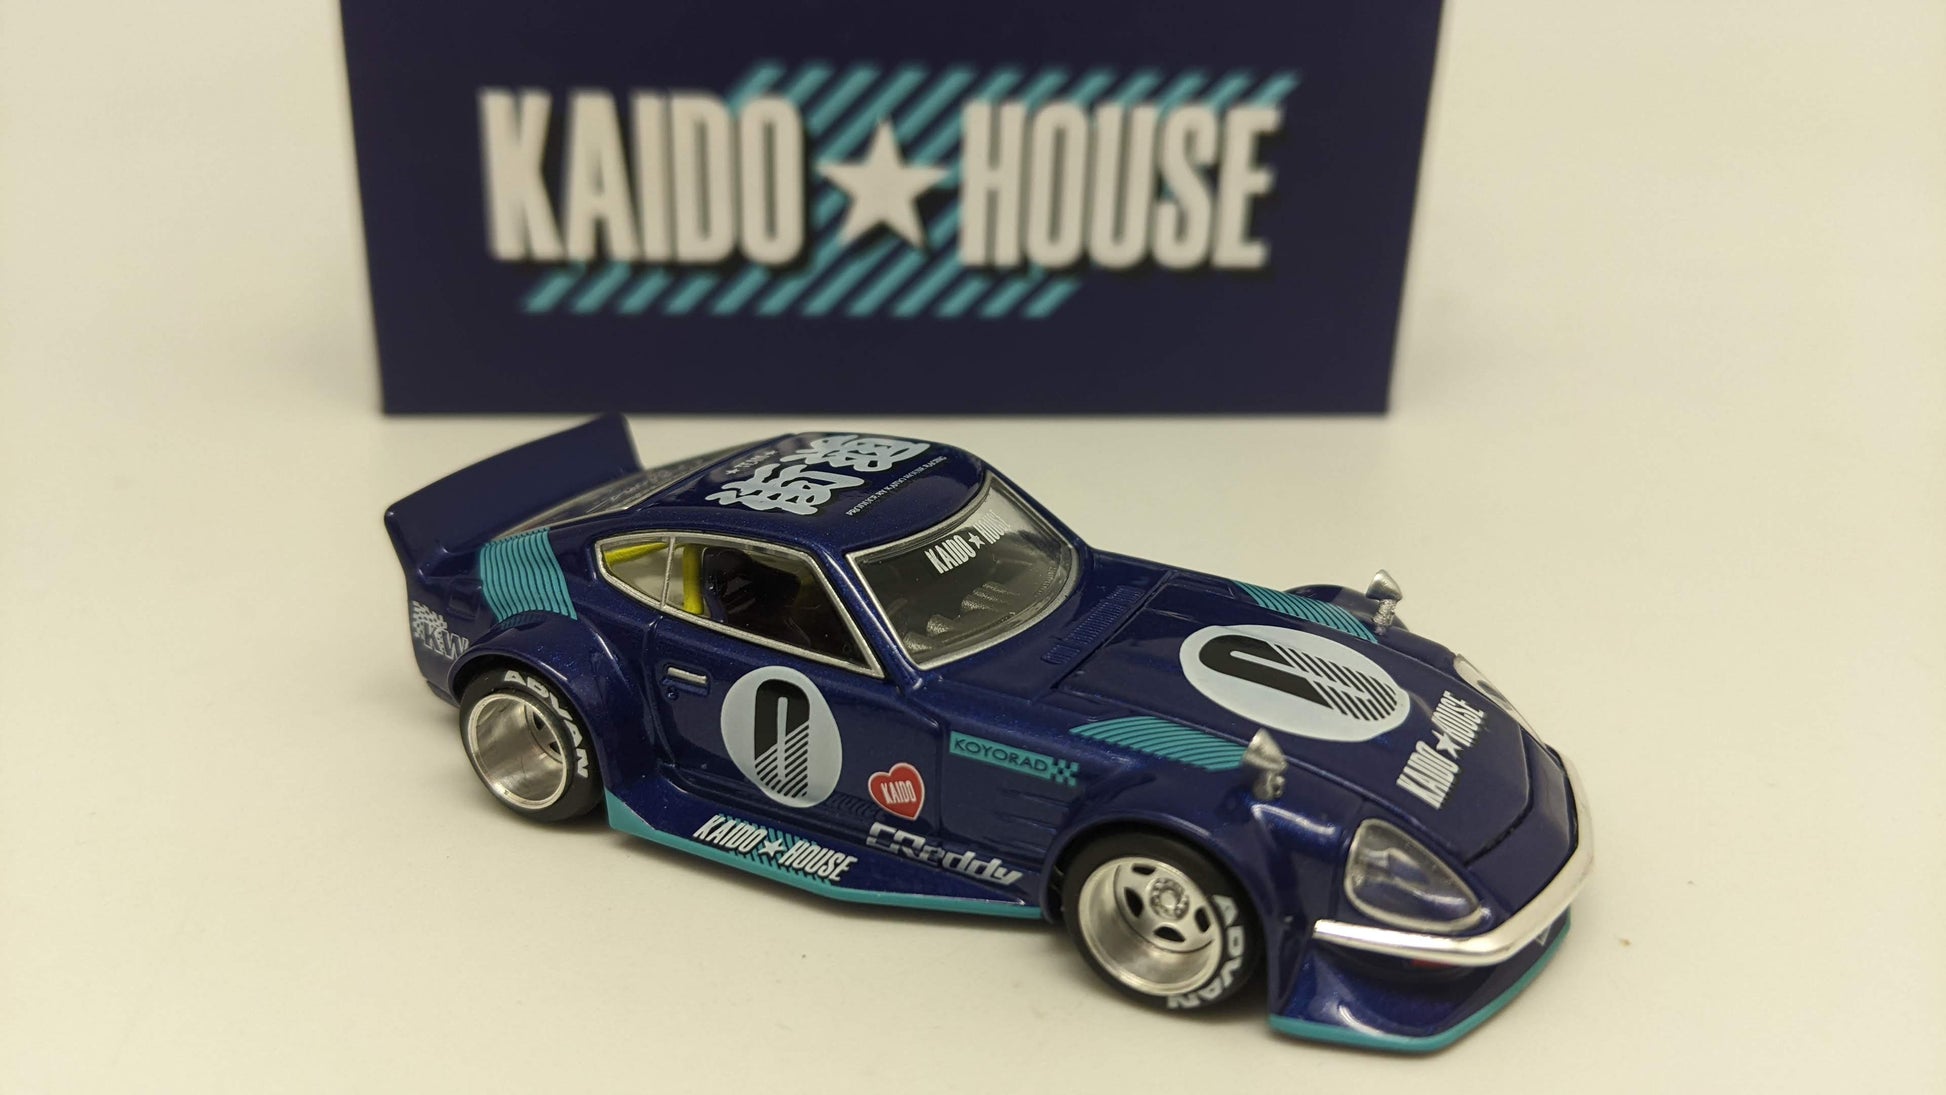 Kaido House Mini GT 010 Wagon – House of Cars Virginia